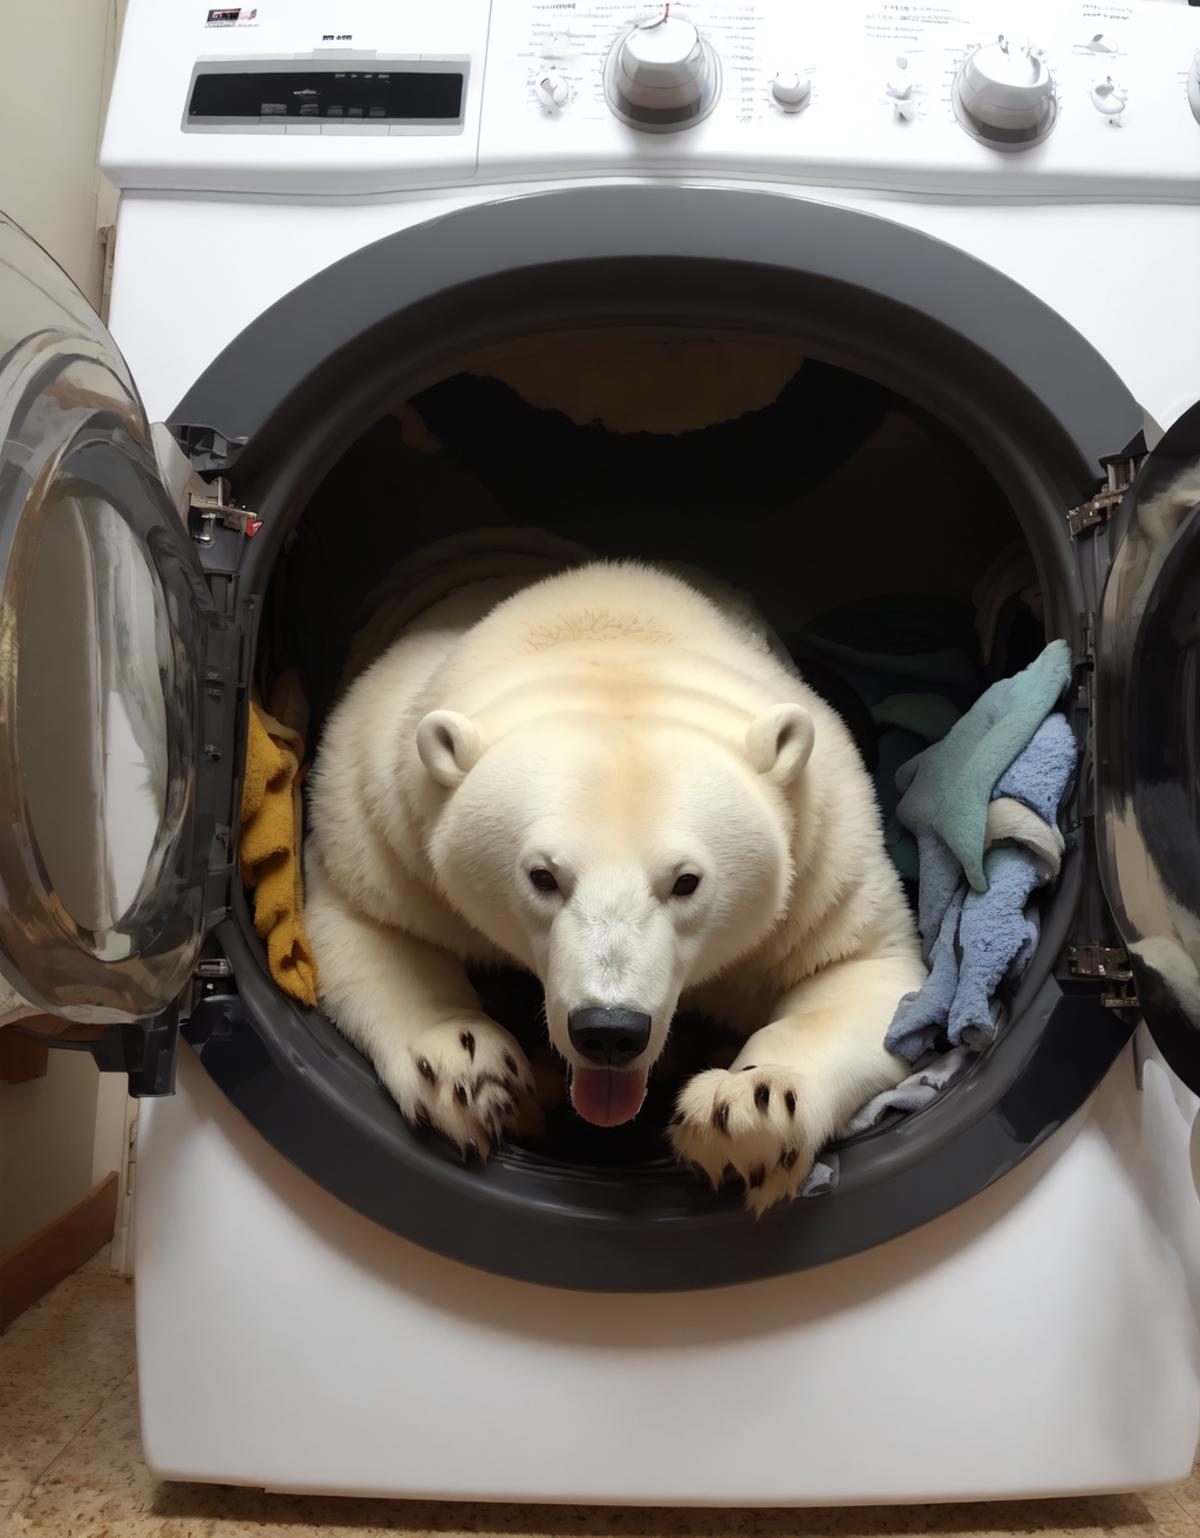 A large white polar bear sitting inside a washing machine.